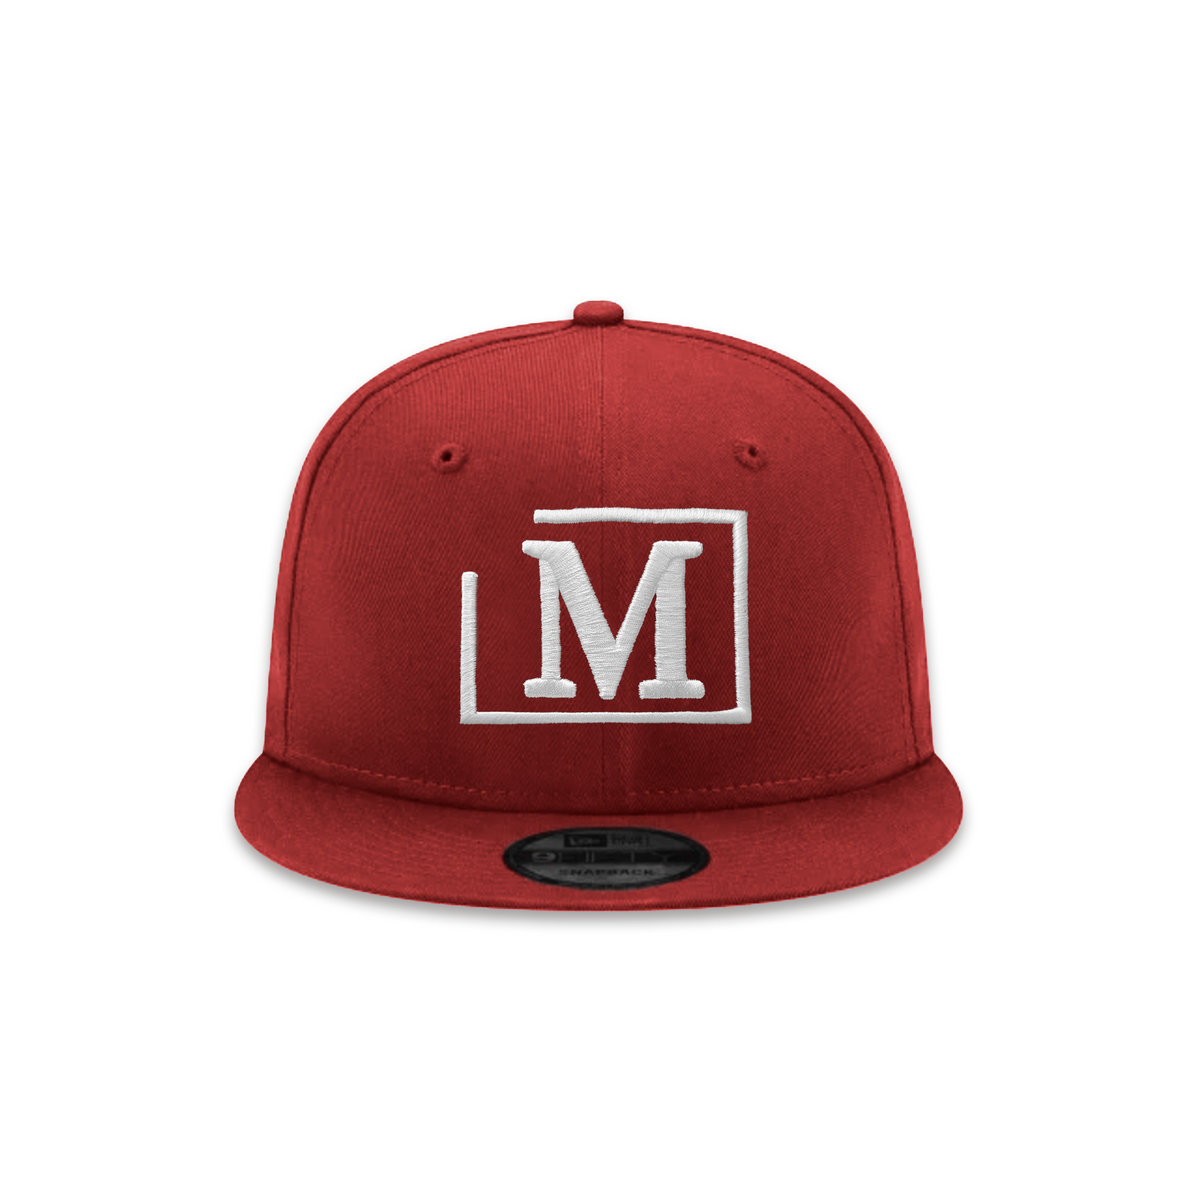 MDB Brand x New Era 9Fifty Snapback Embroidered Baseball Cap - Red